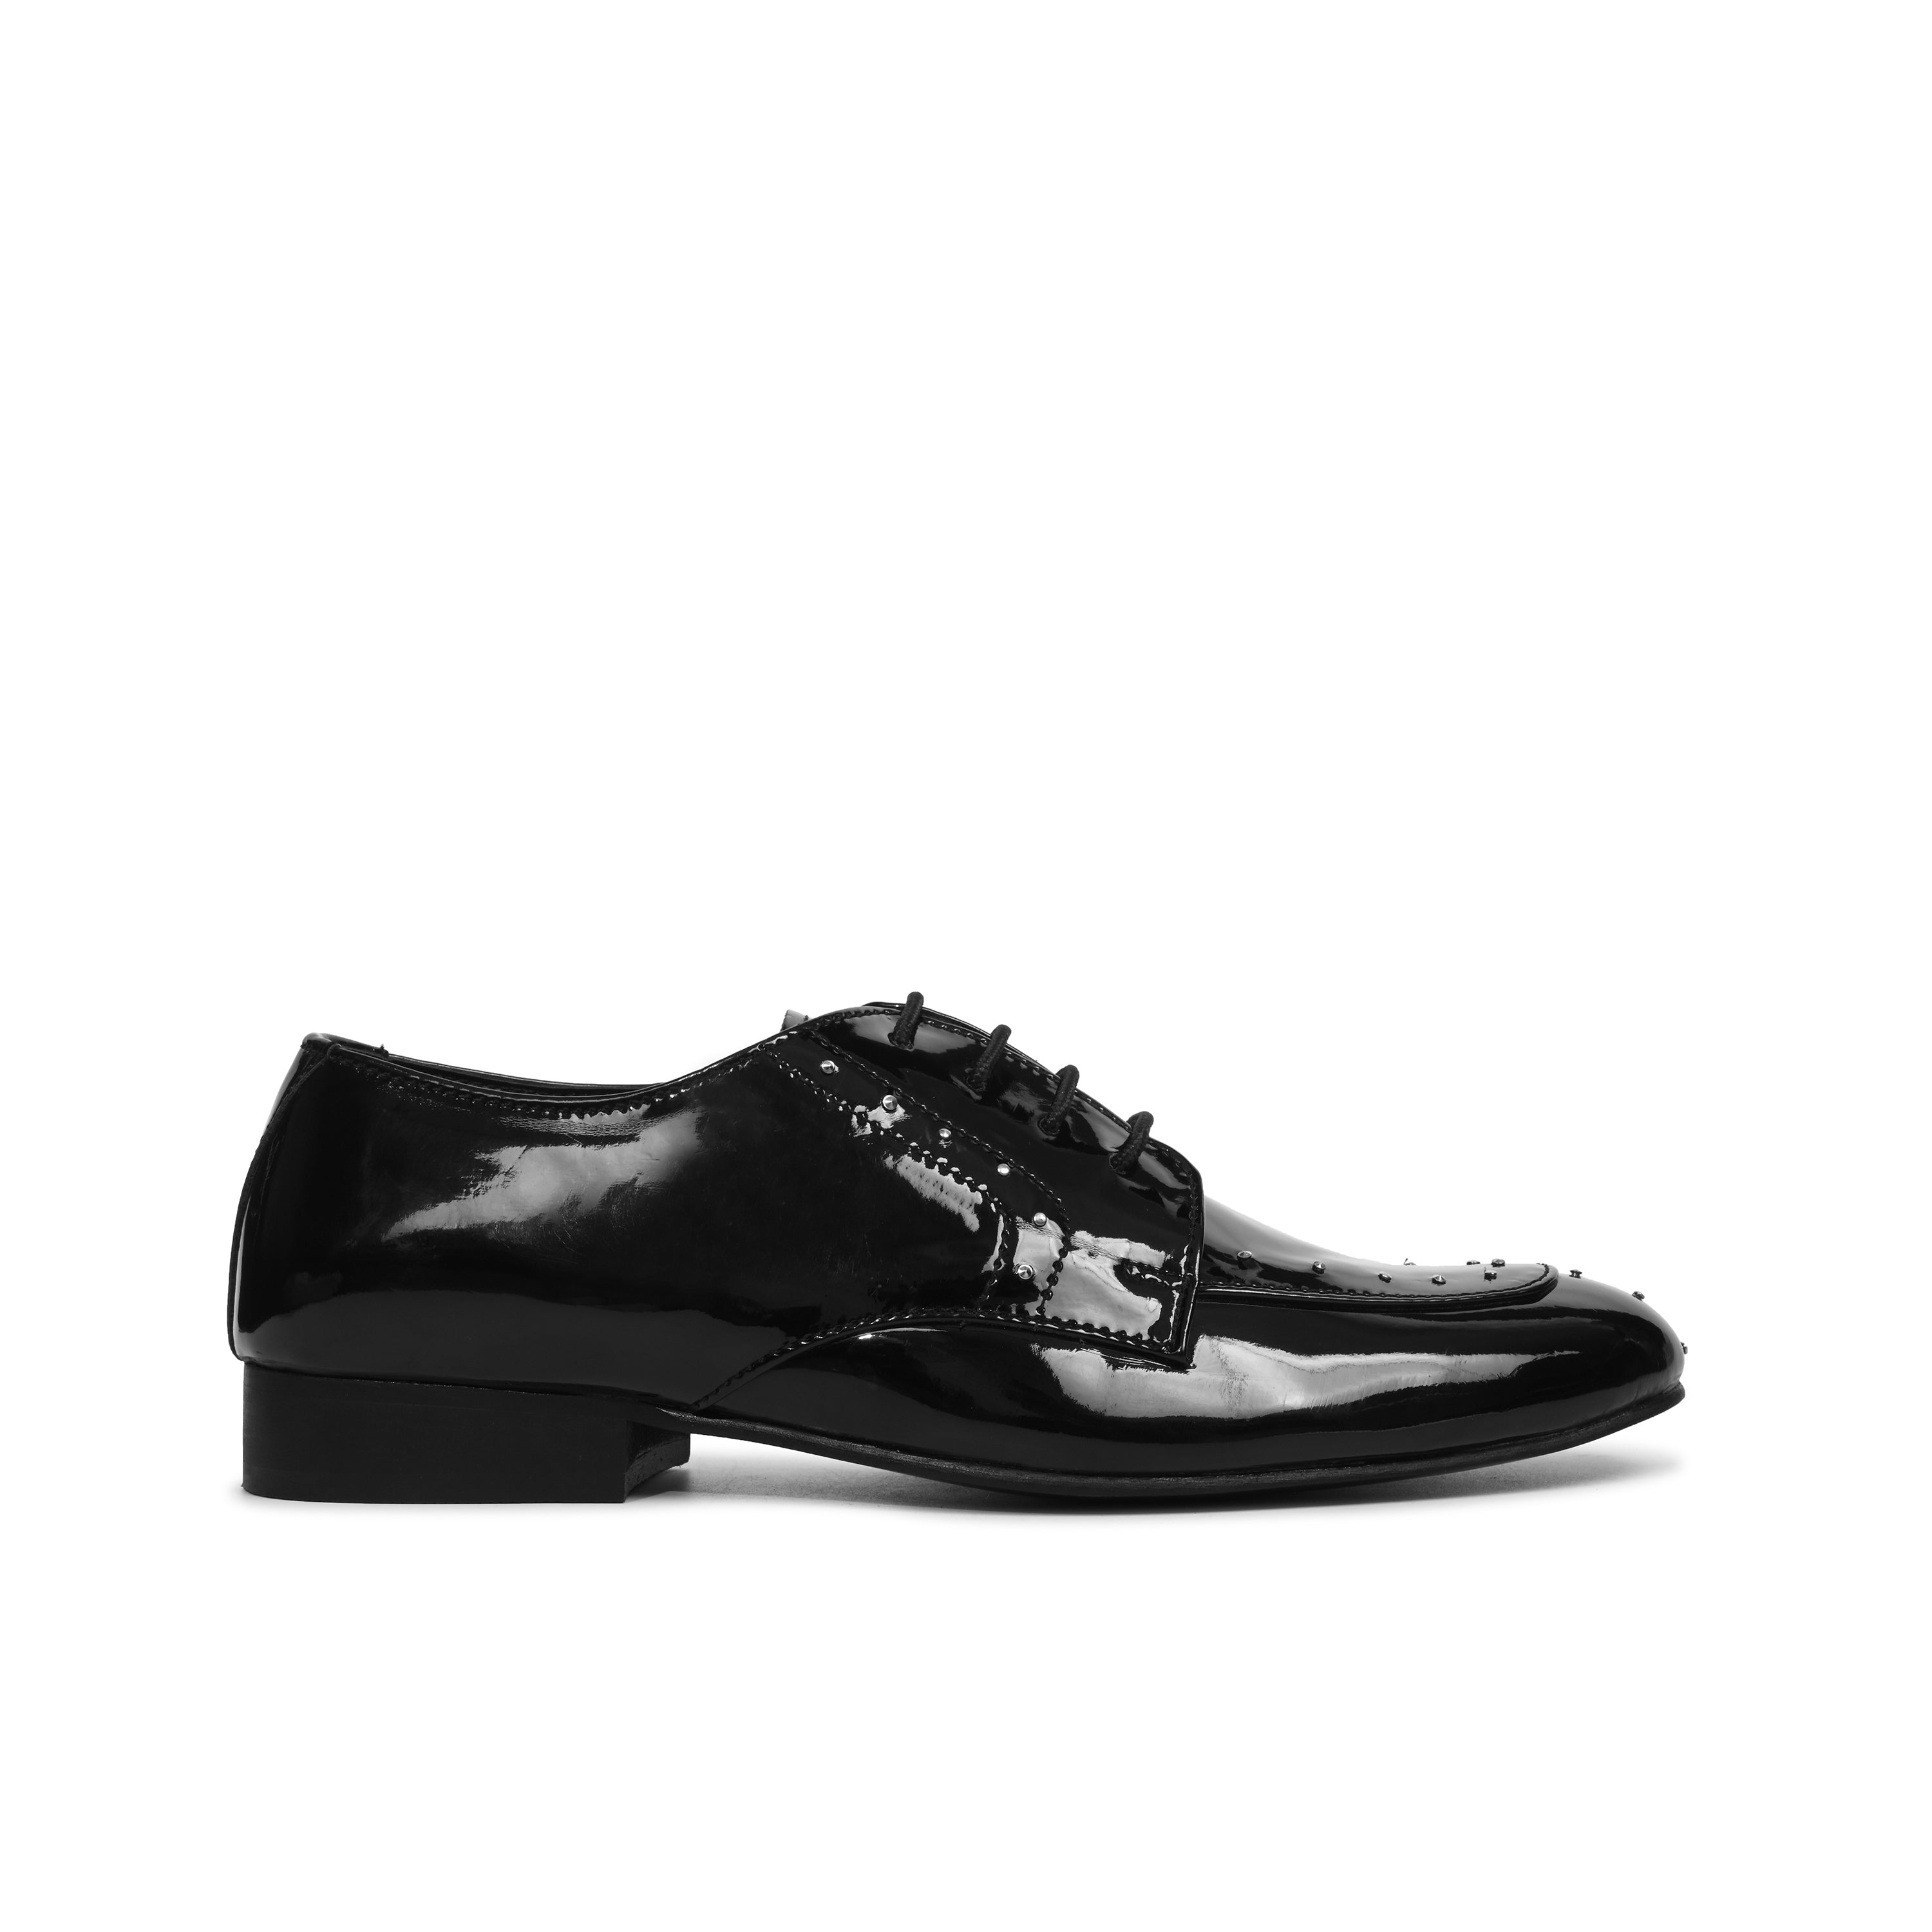 Black Patent Leather Designer Shoes